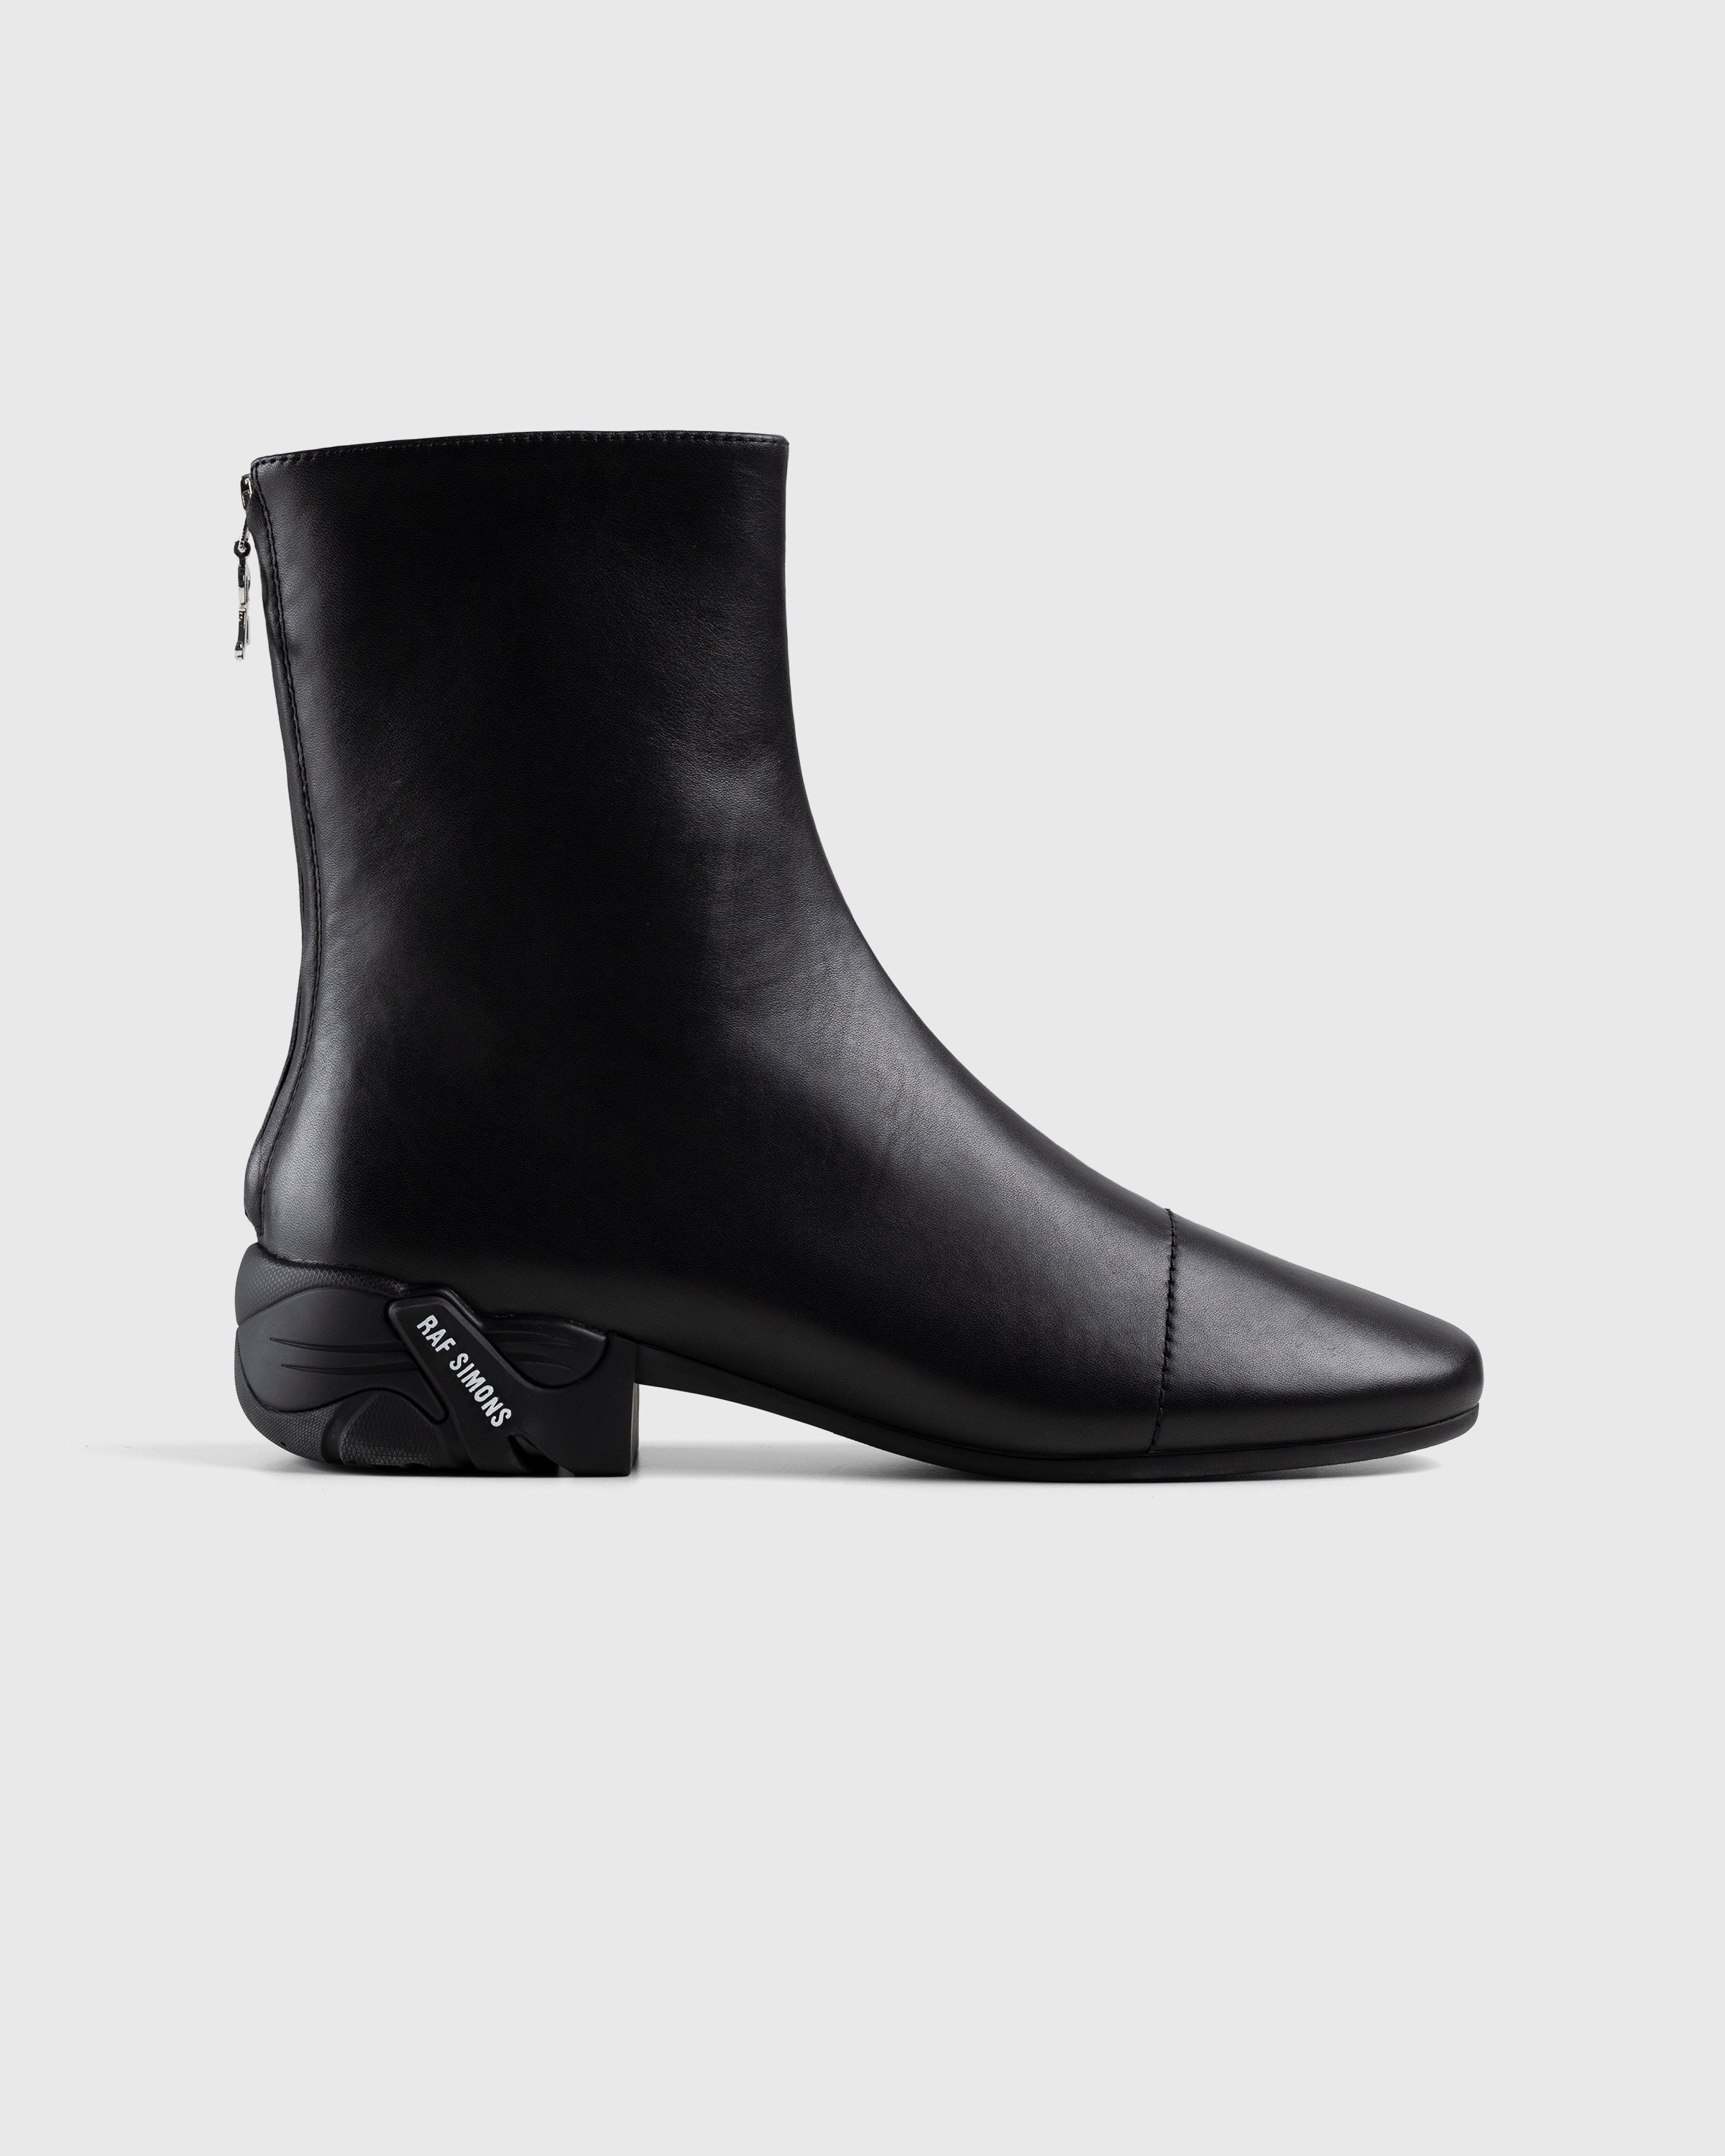 Raf Simons - Solaris High Leather Boot Black - Footwear - Black - Image 1